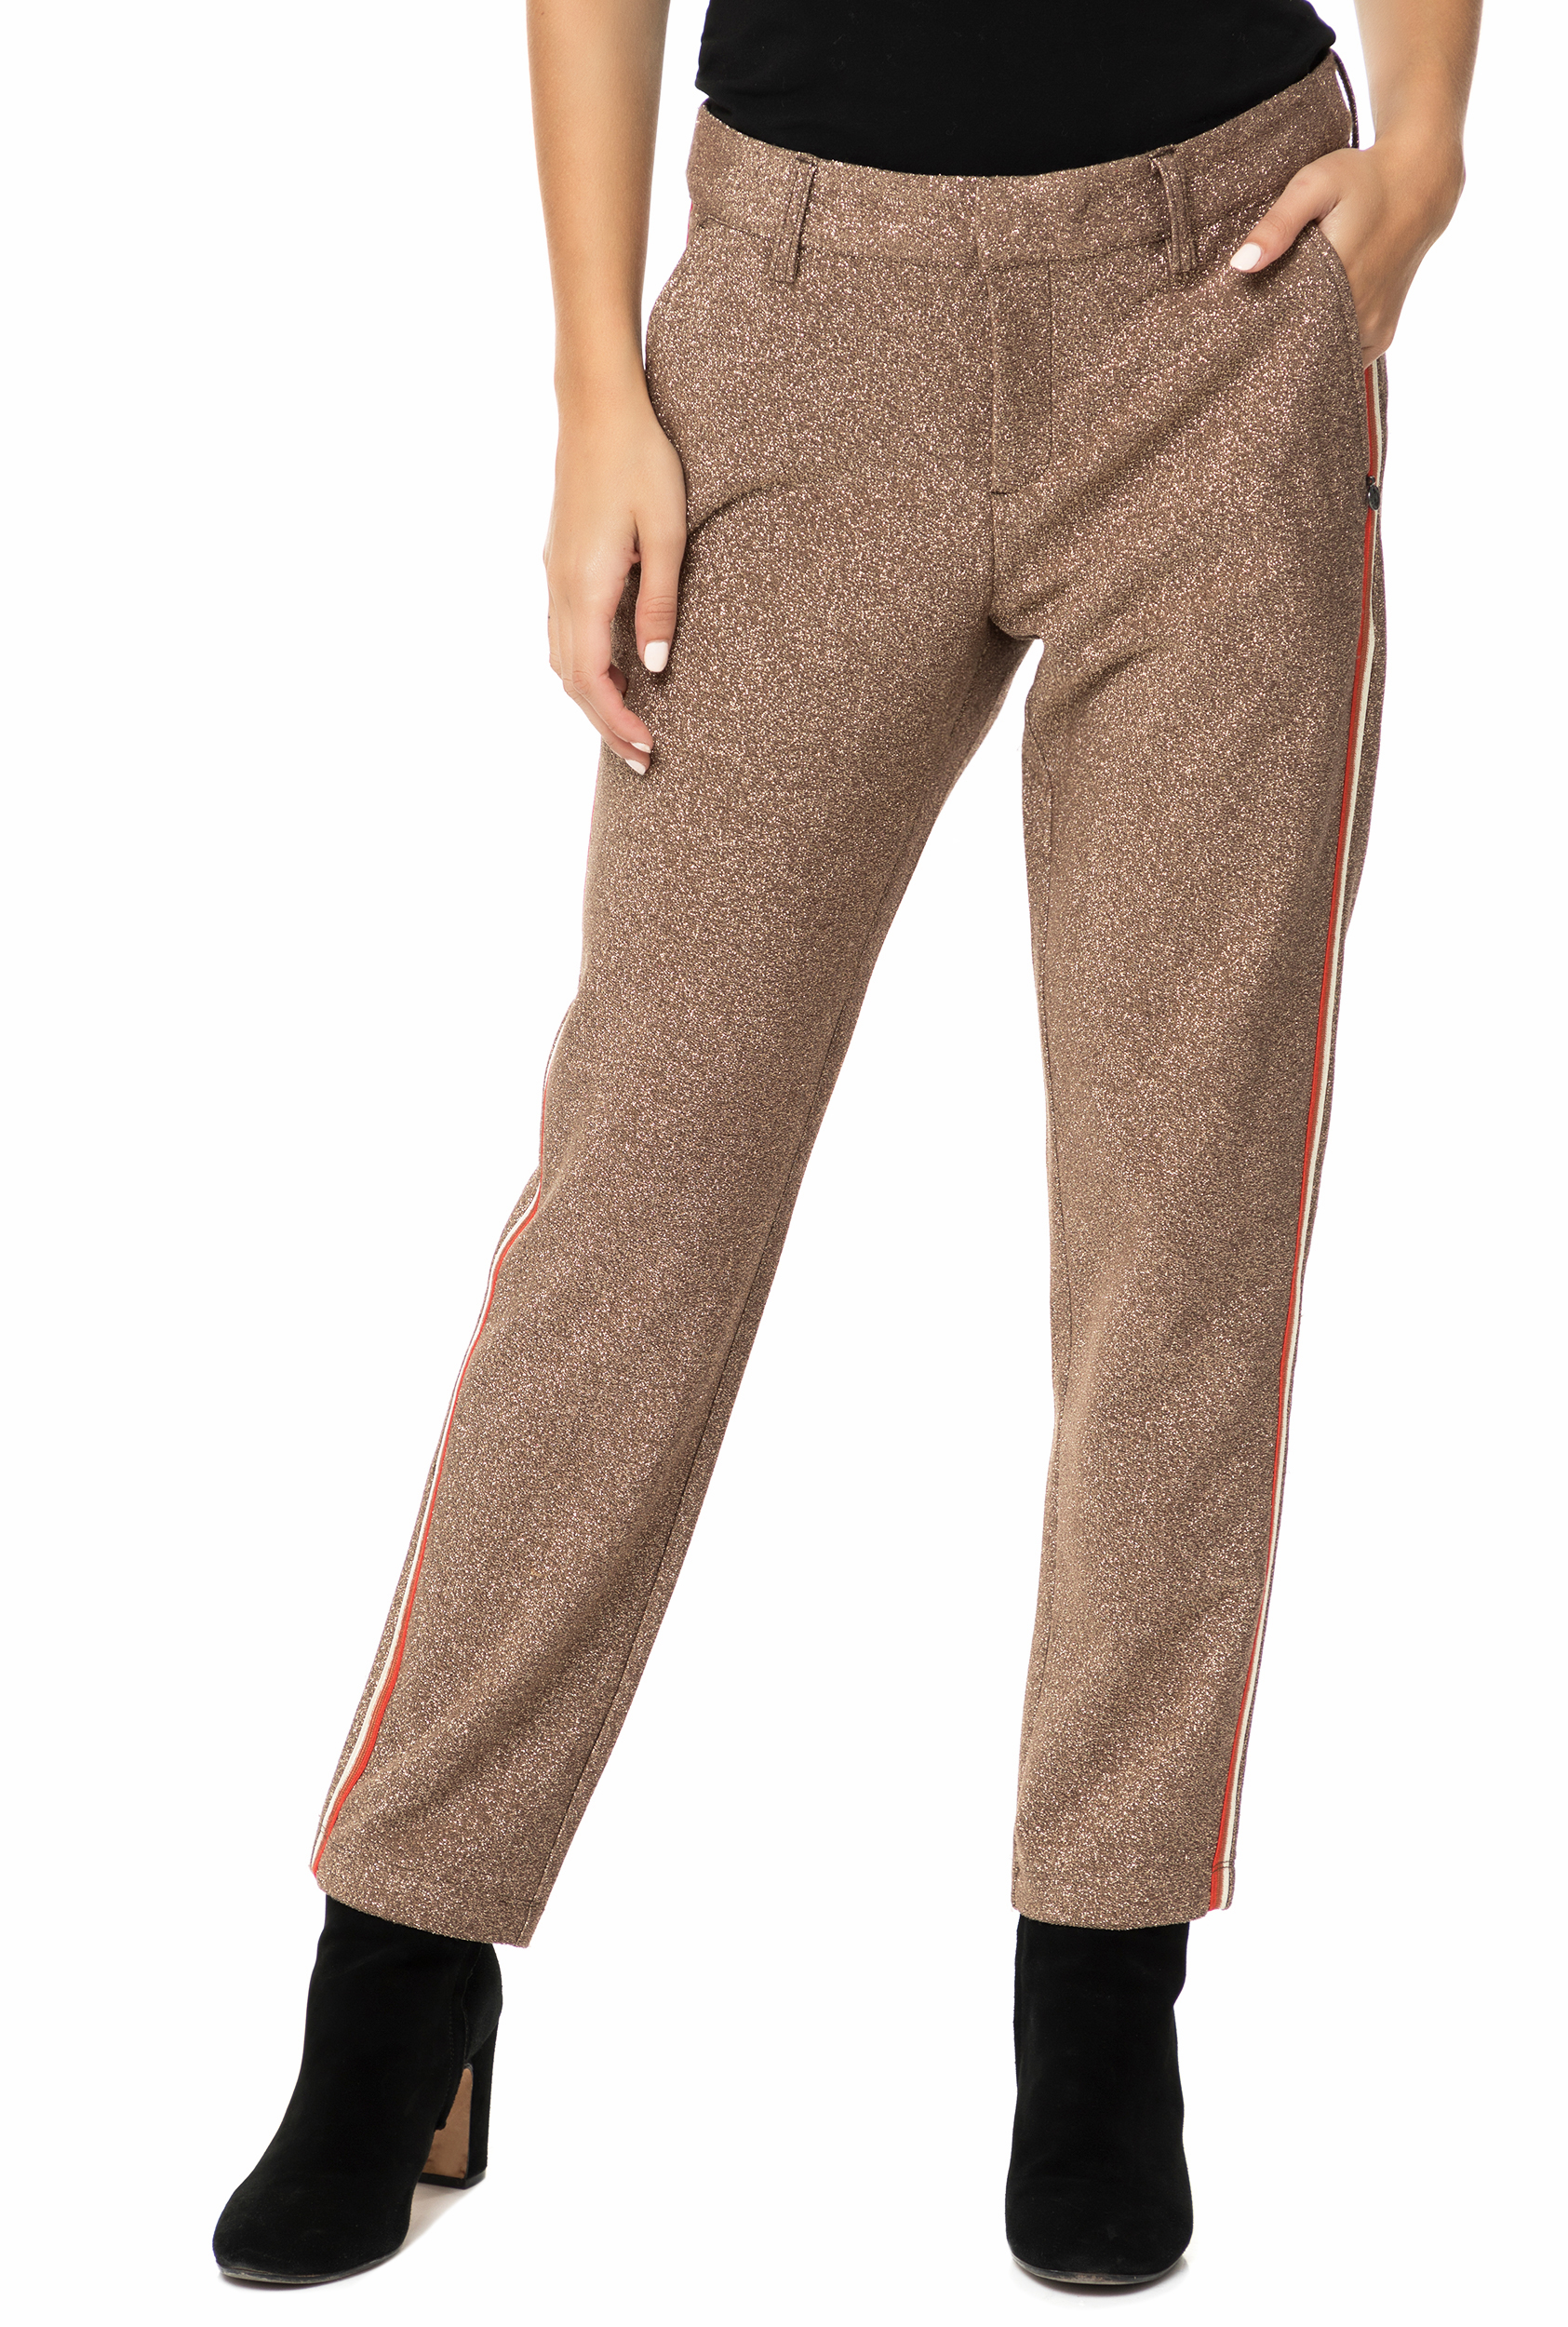 SCOTCH & SODA - Γυναικείο παντελόνι SCOTCH & SODA Lurex tailored καφέ με λάμψη Γυναικεία/Ρούχα/Παντελόνια/Ισια Γραμμή